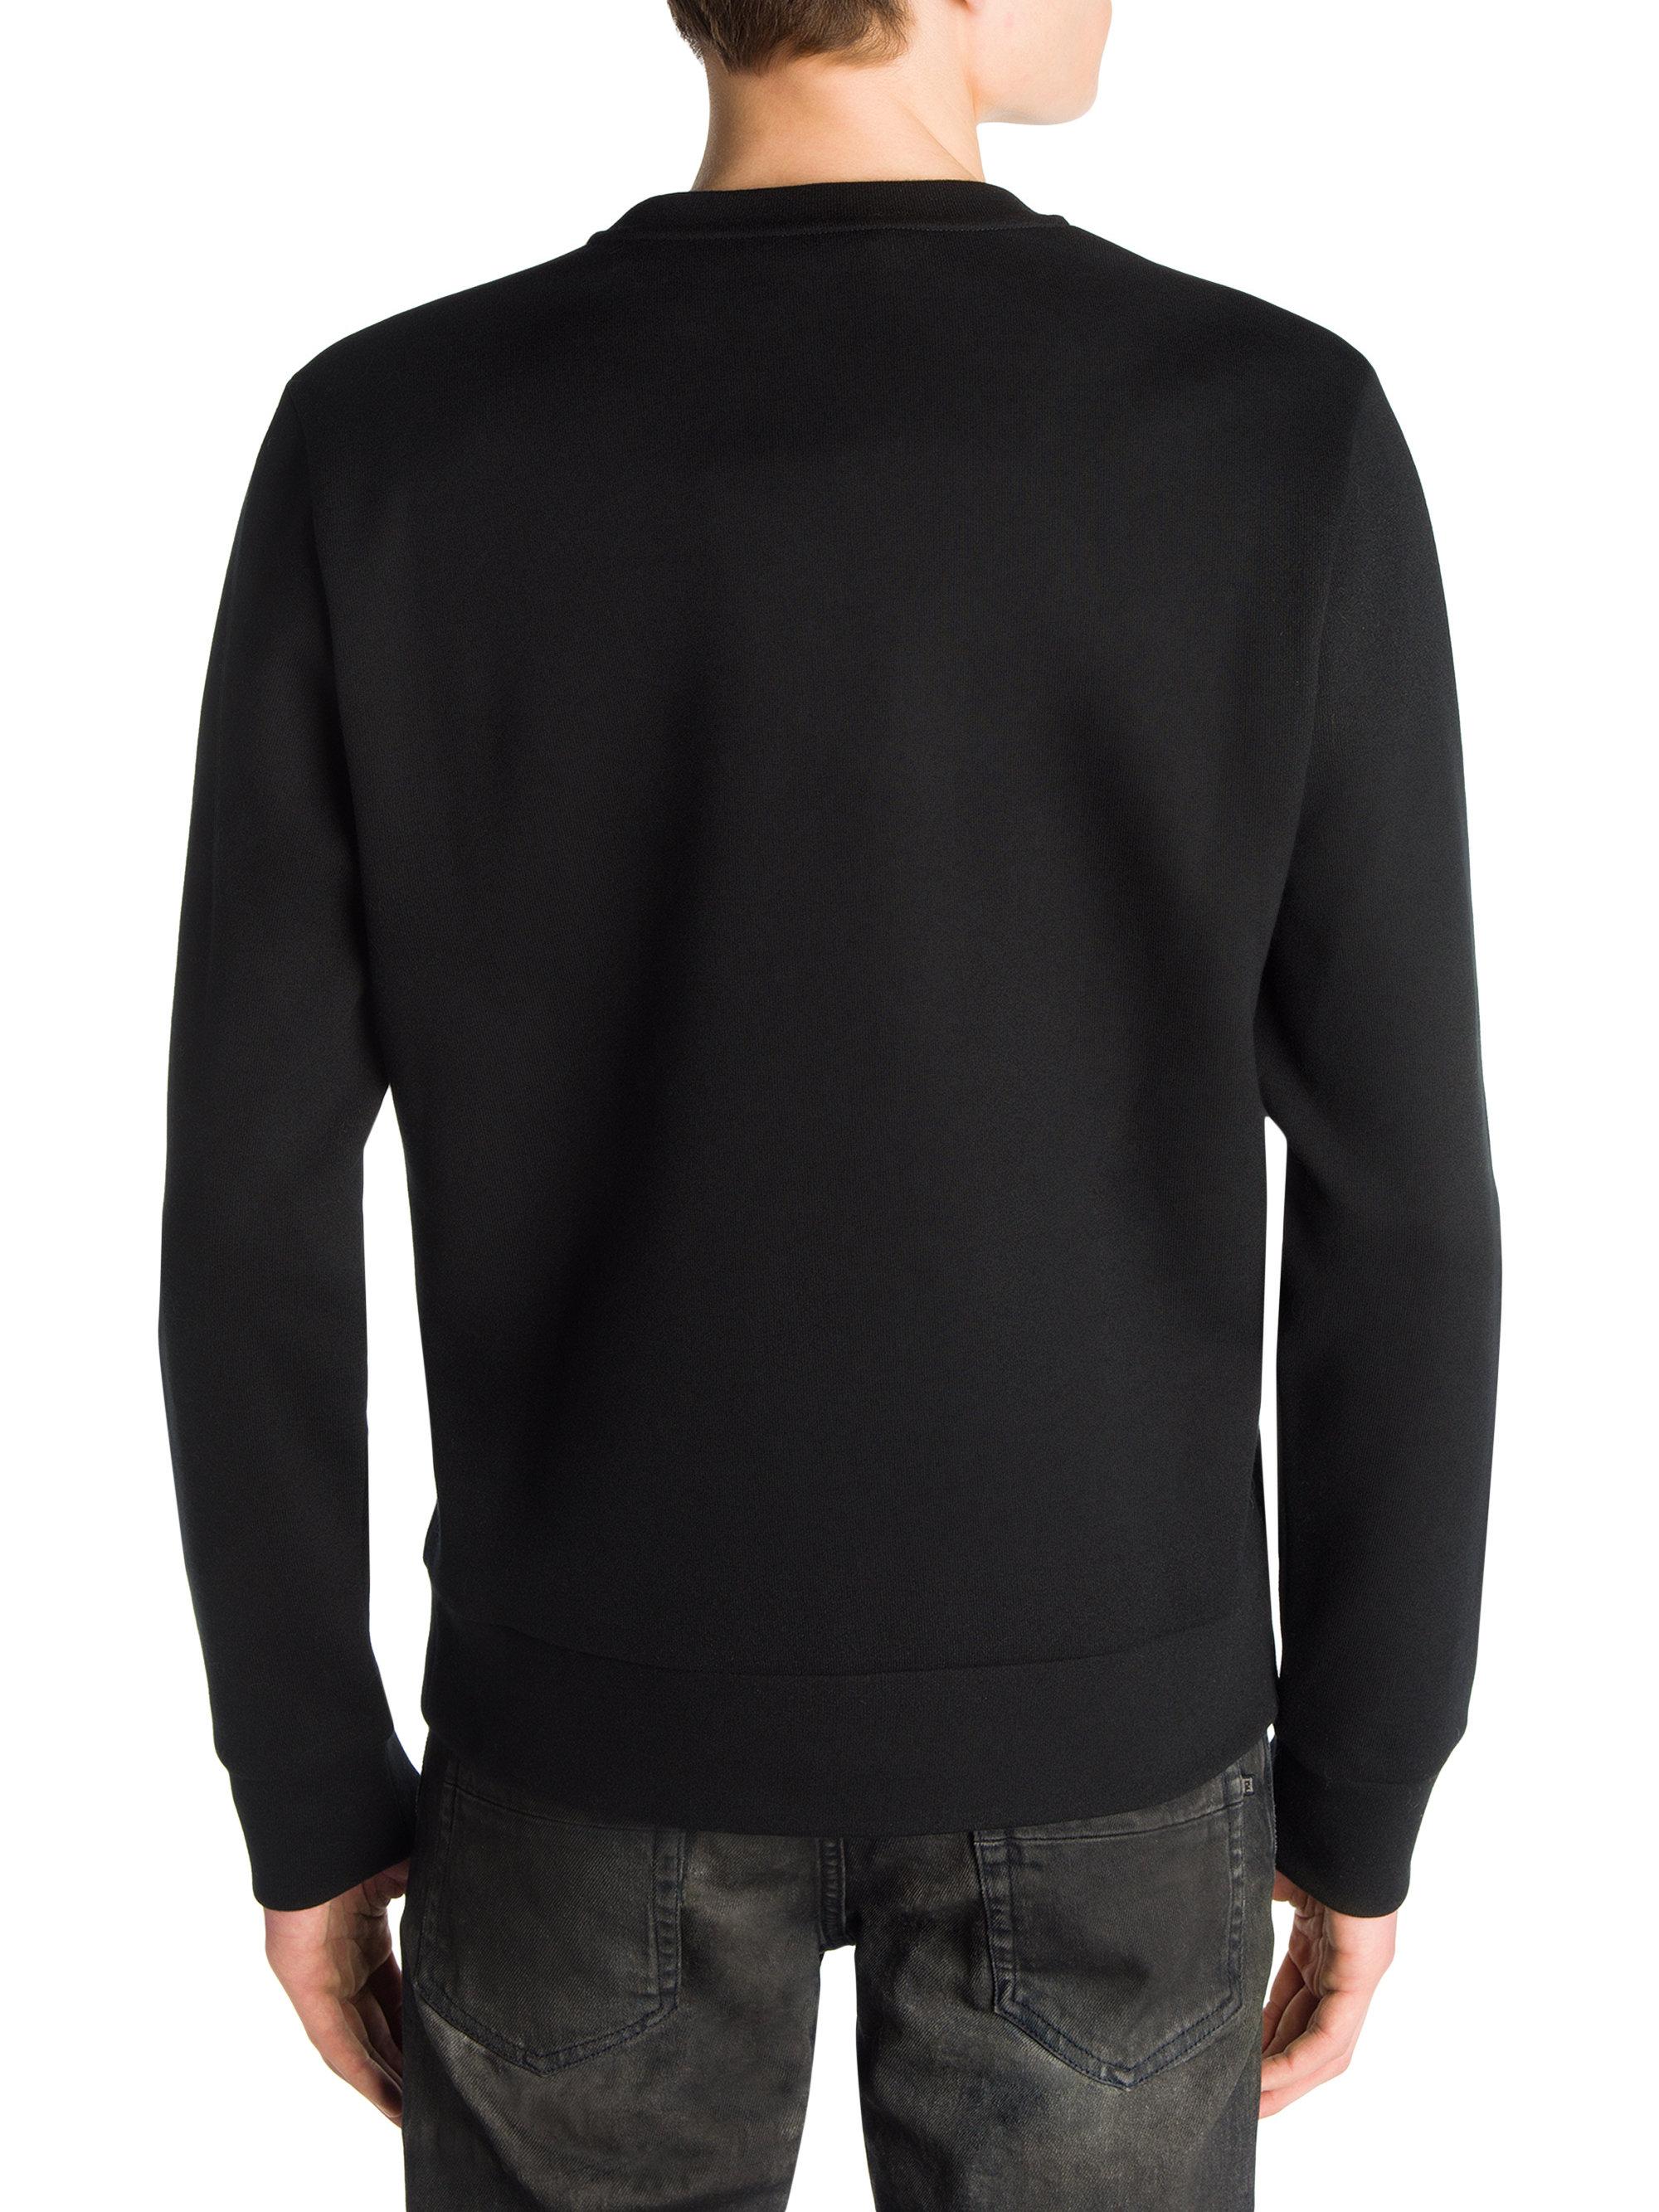 Lyst - Fendi Jaguar Sweatshirt in Black for Men